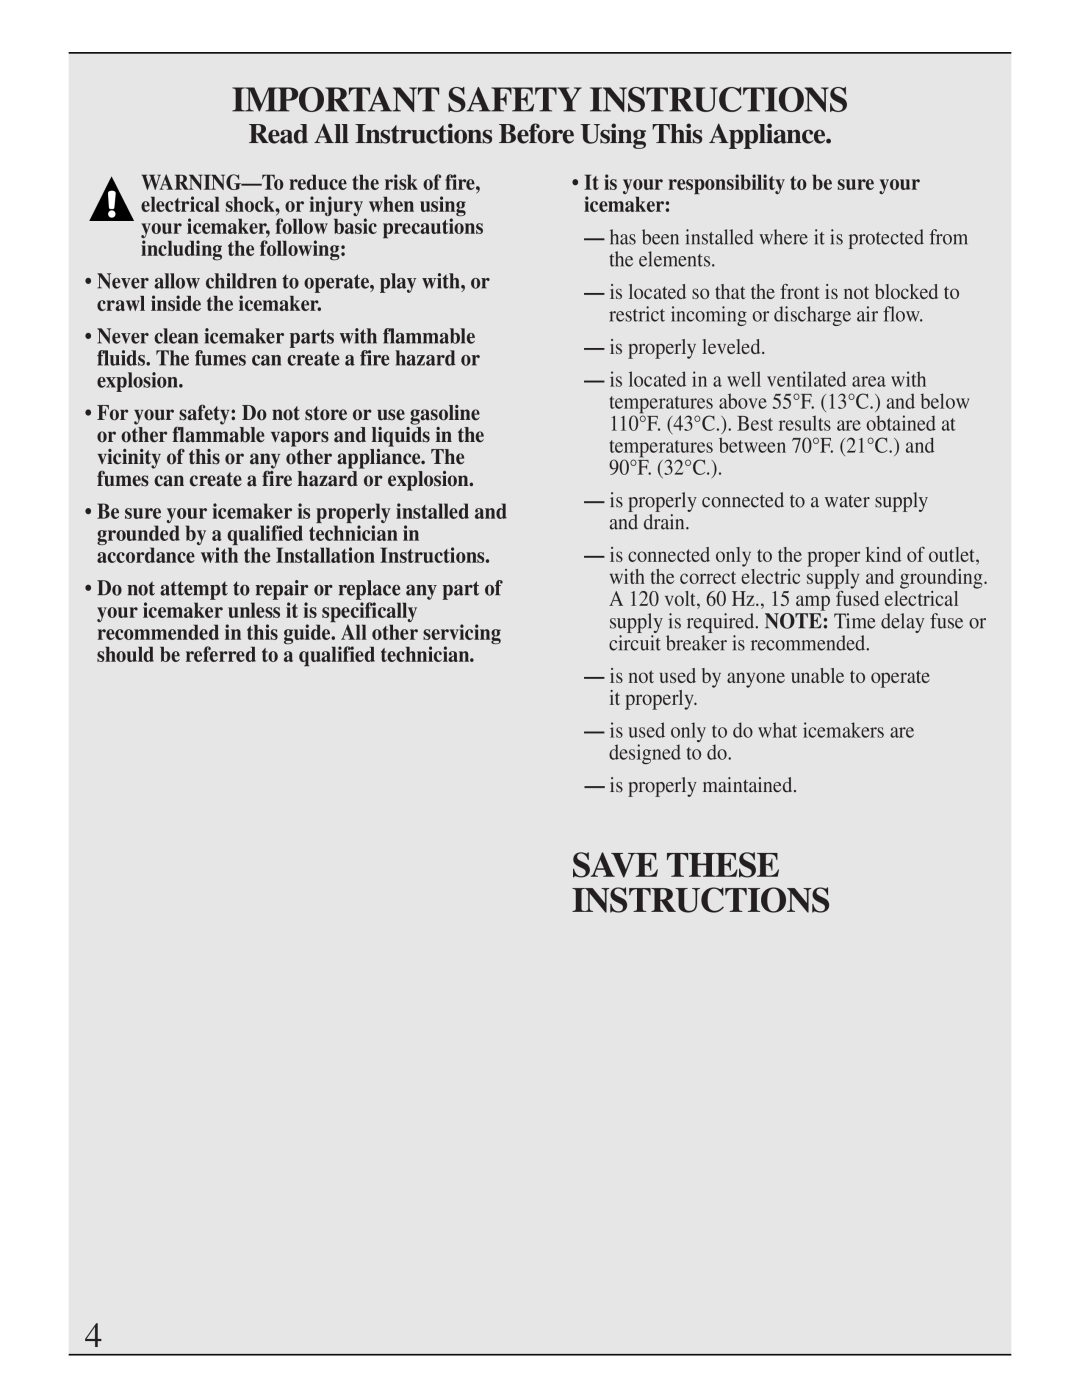 GE Monogram ZDIB50 installation instructions Important Safety Instructions, Save These Instructions 